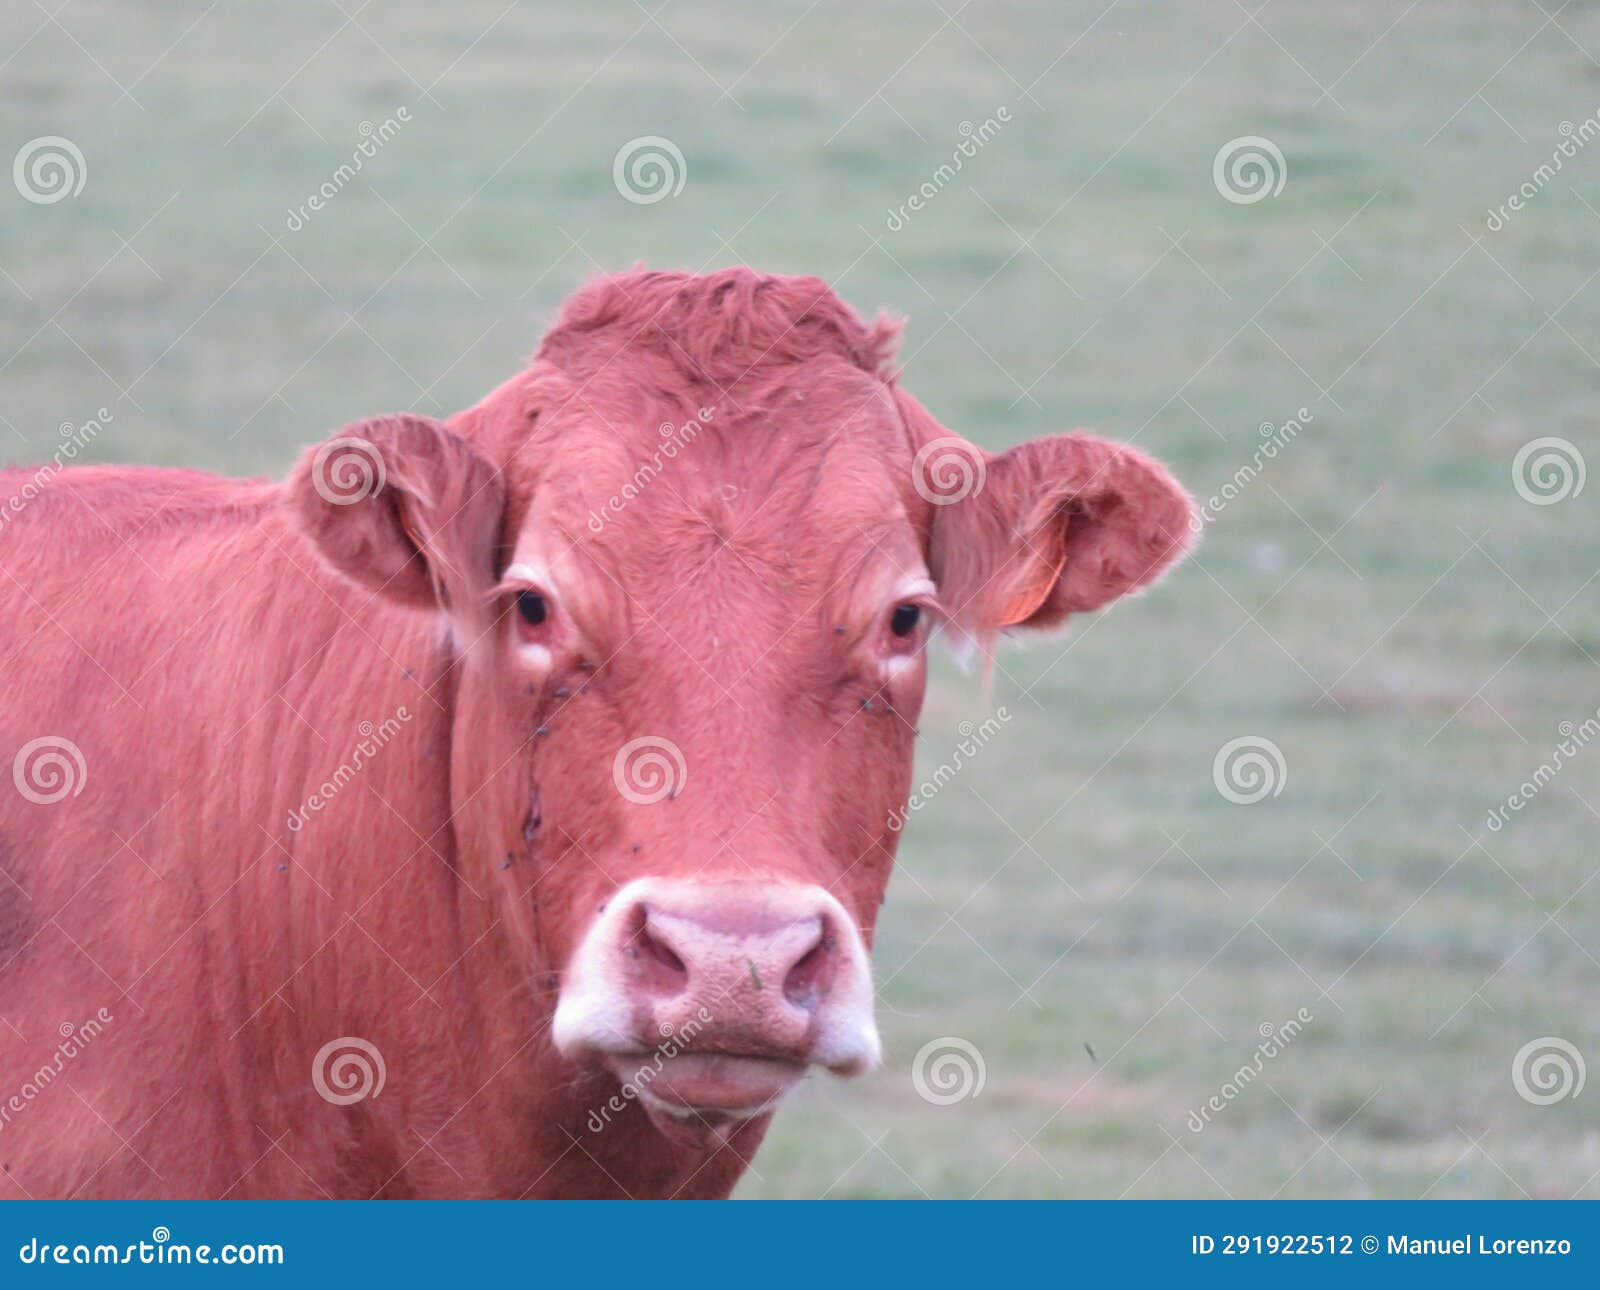 animal cow farm meadows boil milk meat feed production